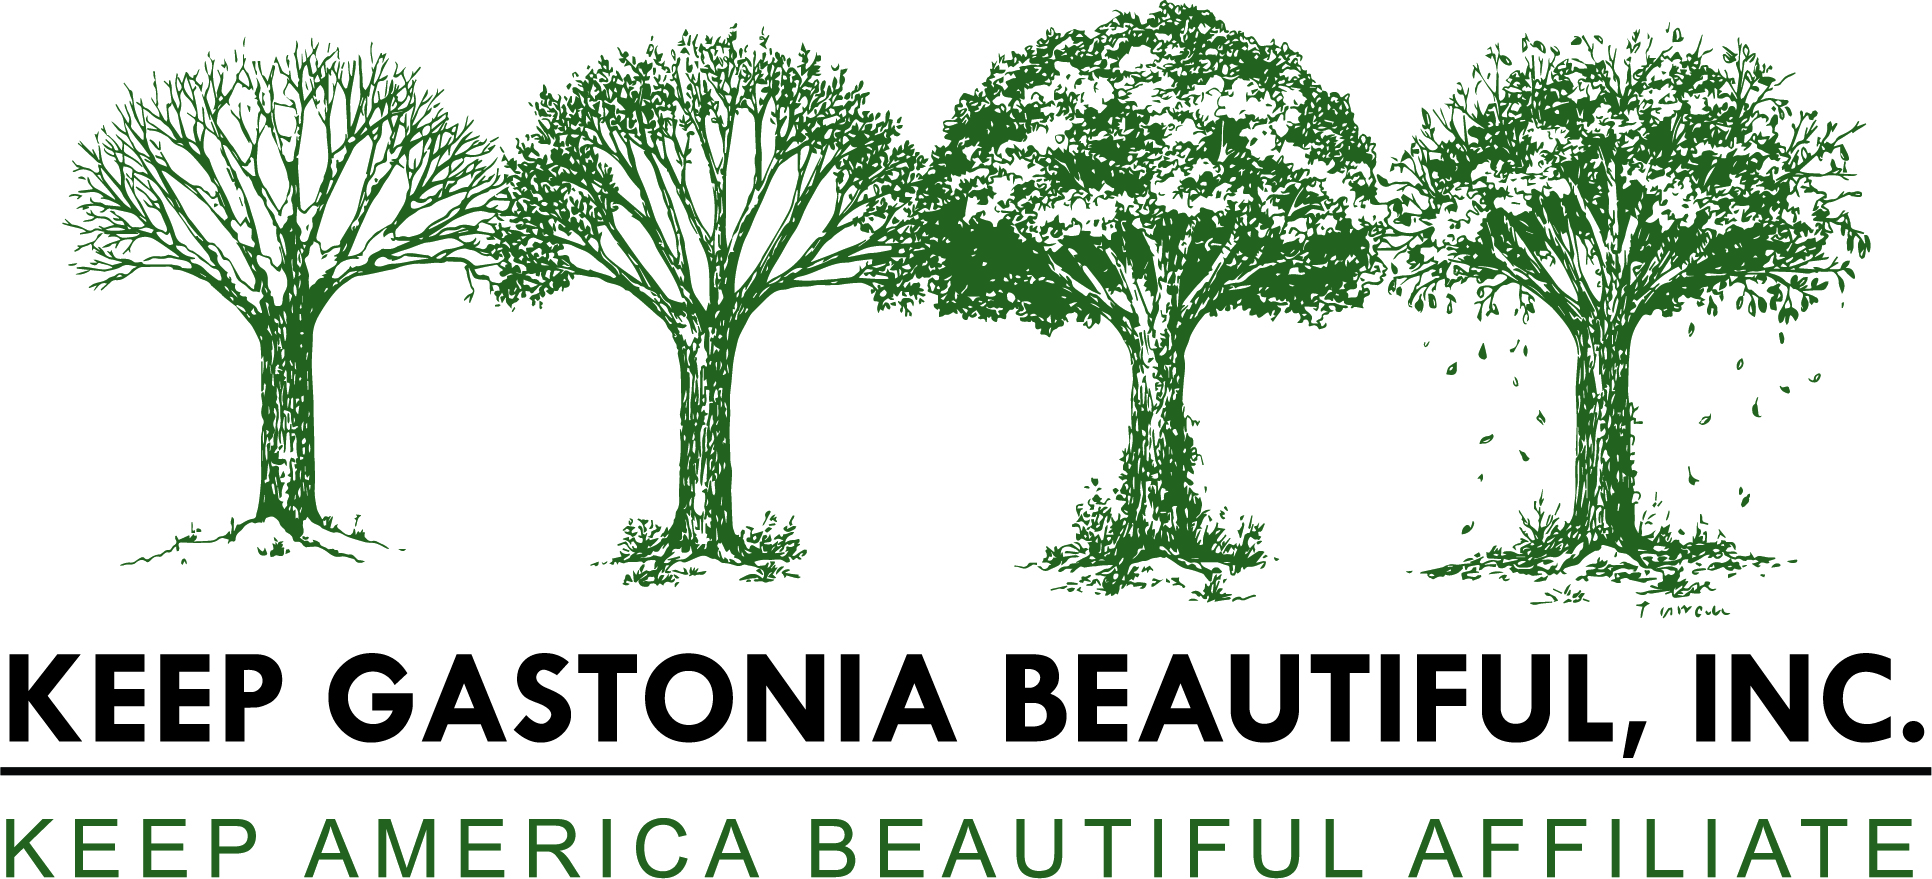 Keep Gastonia Beautiful Logo 007